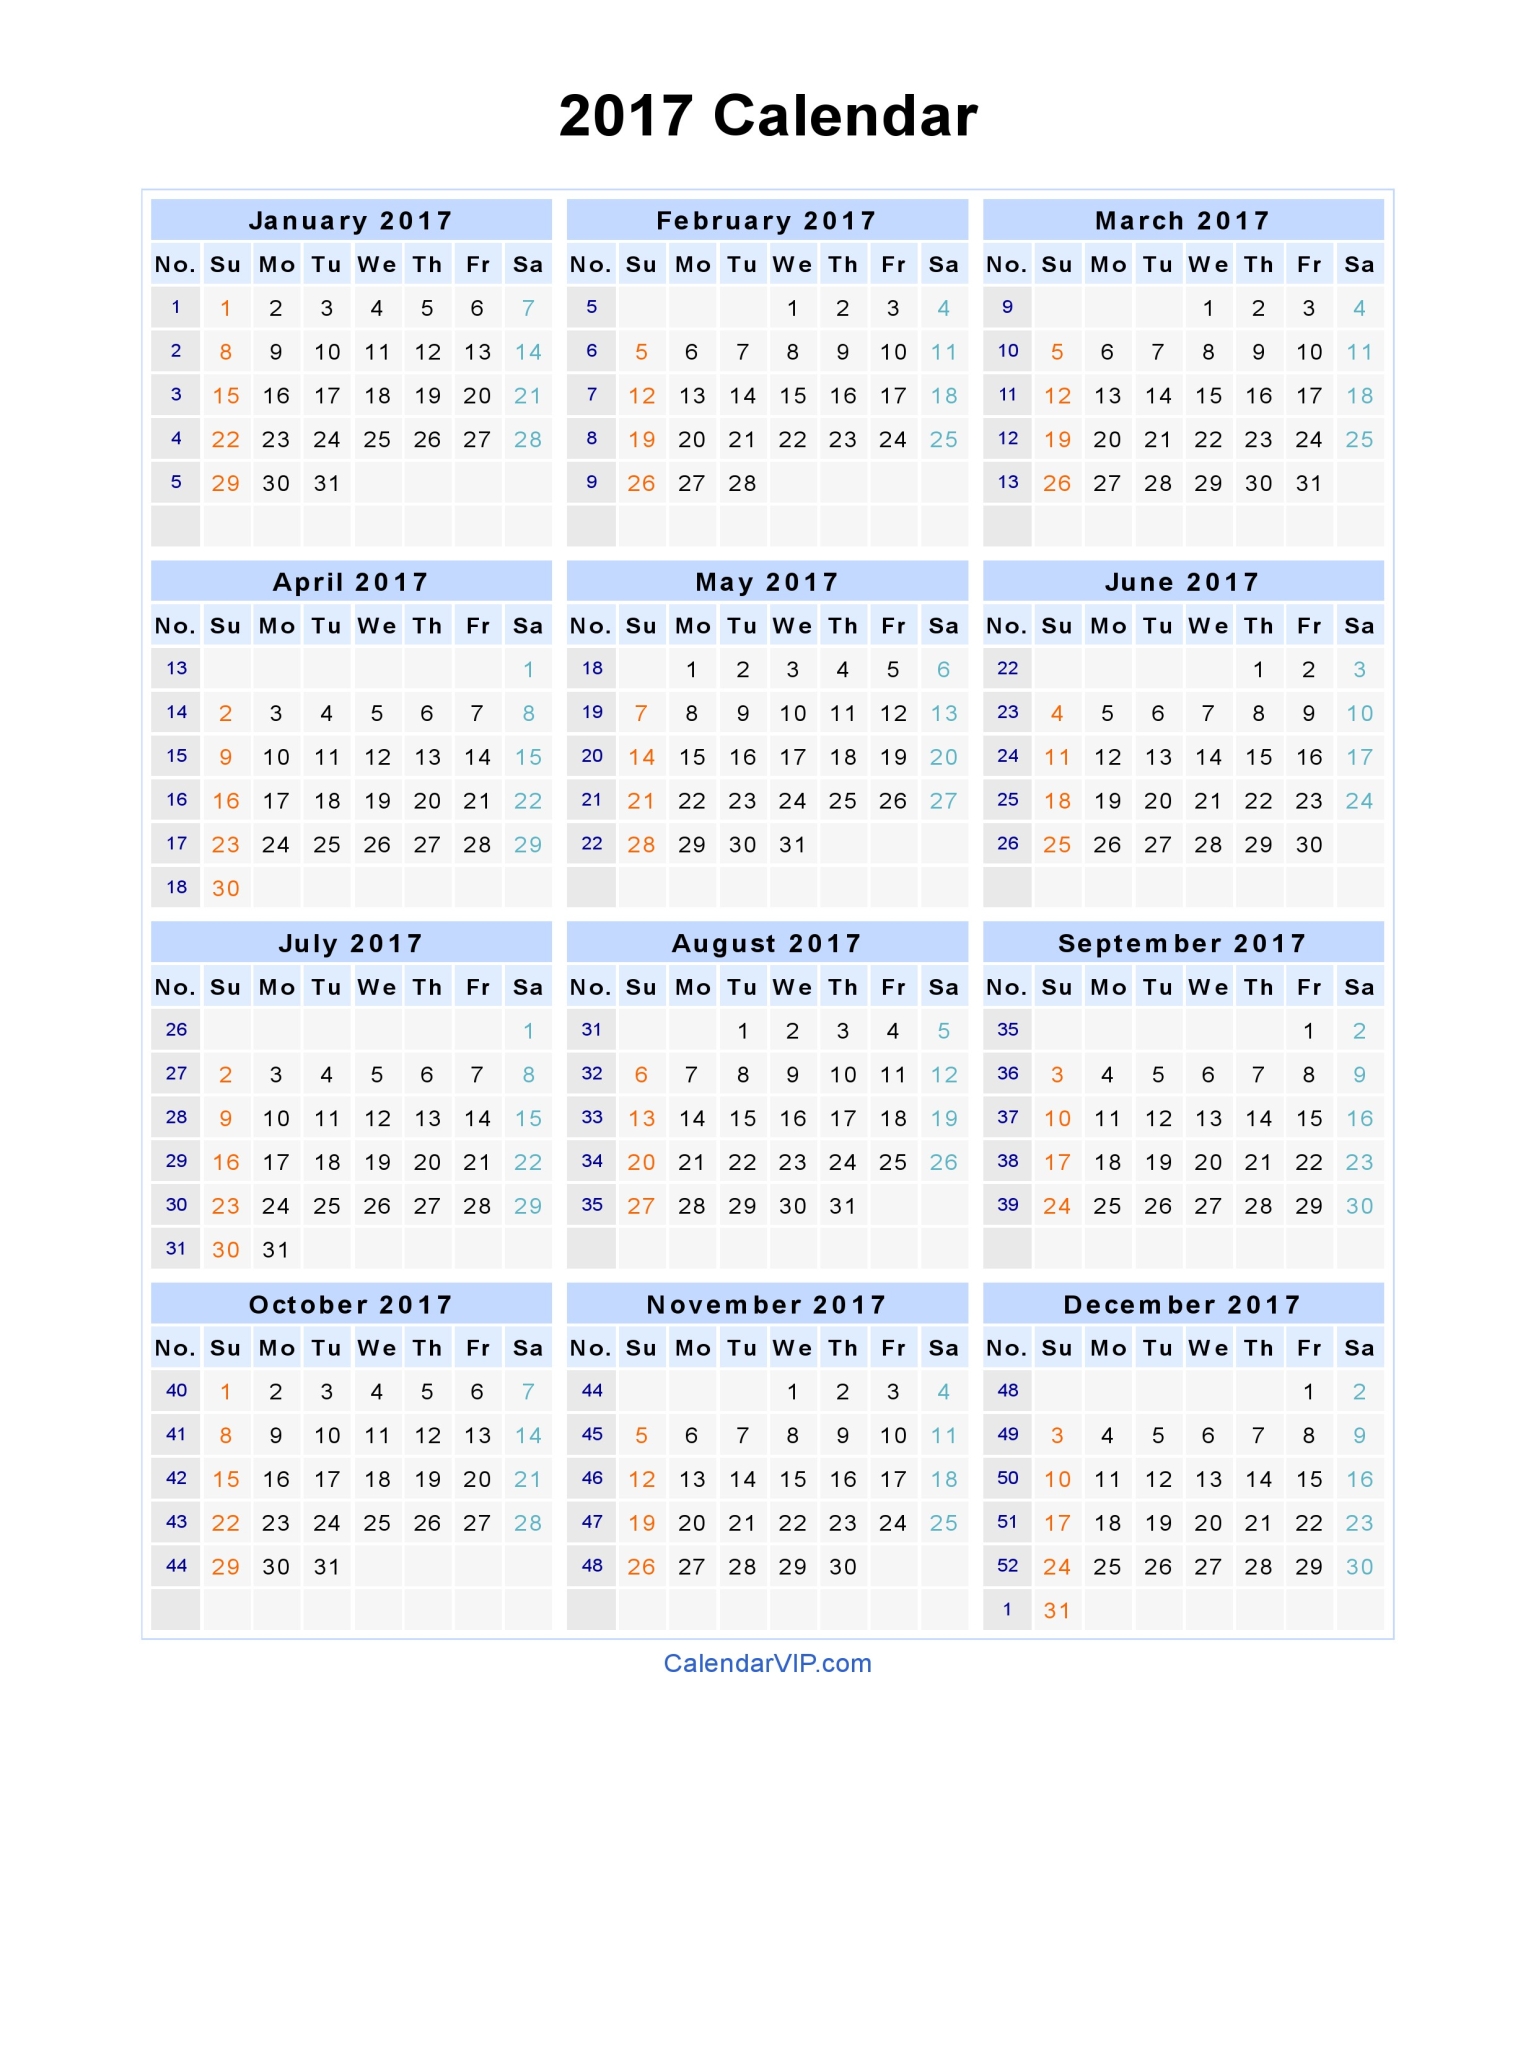 2017 Calendar - Blank Printable Calendar Template in PDF Word Excel1536 x 2048